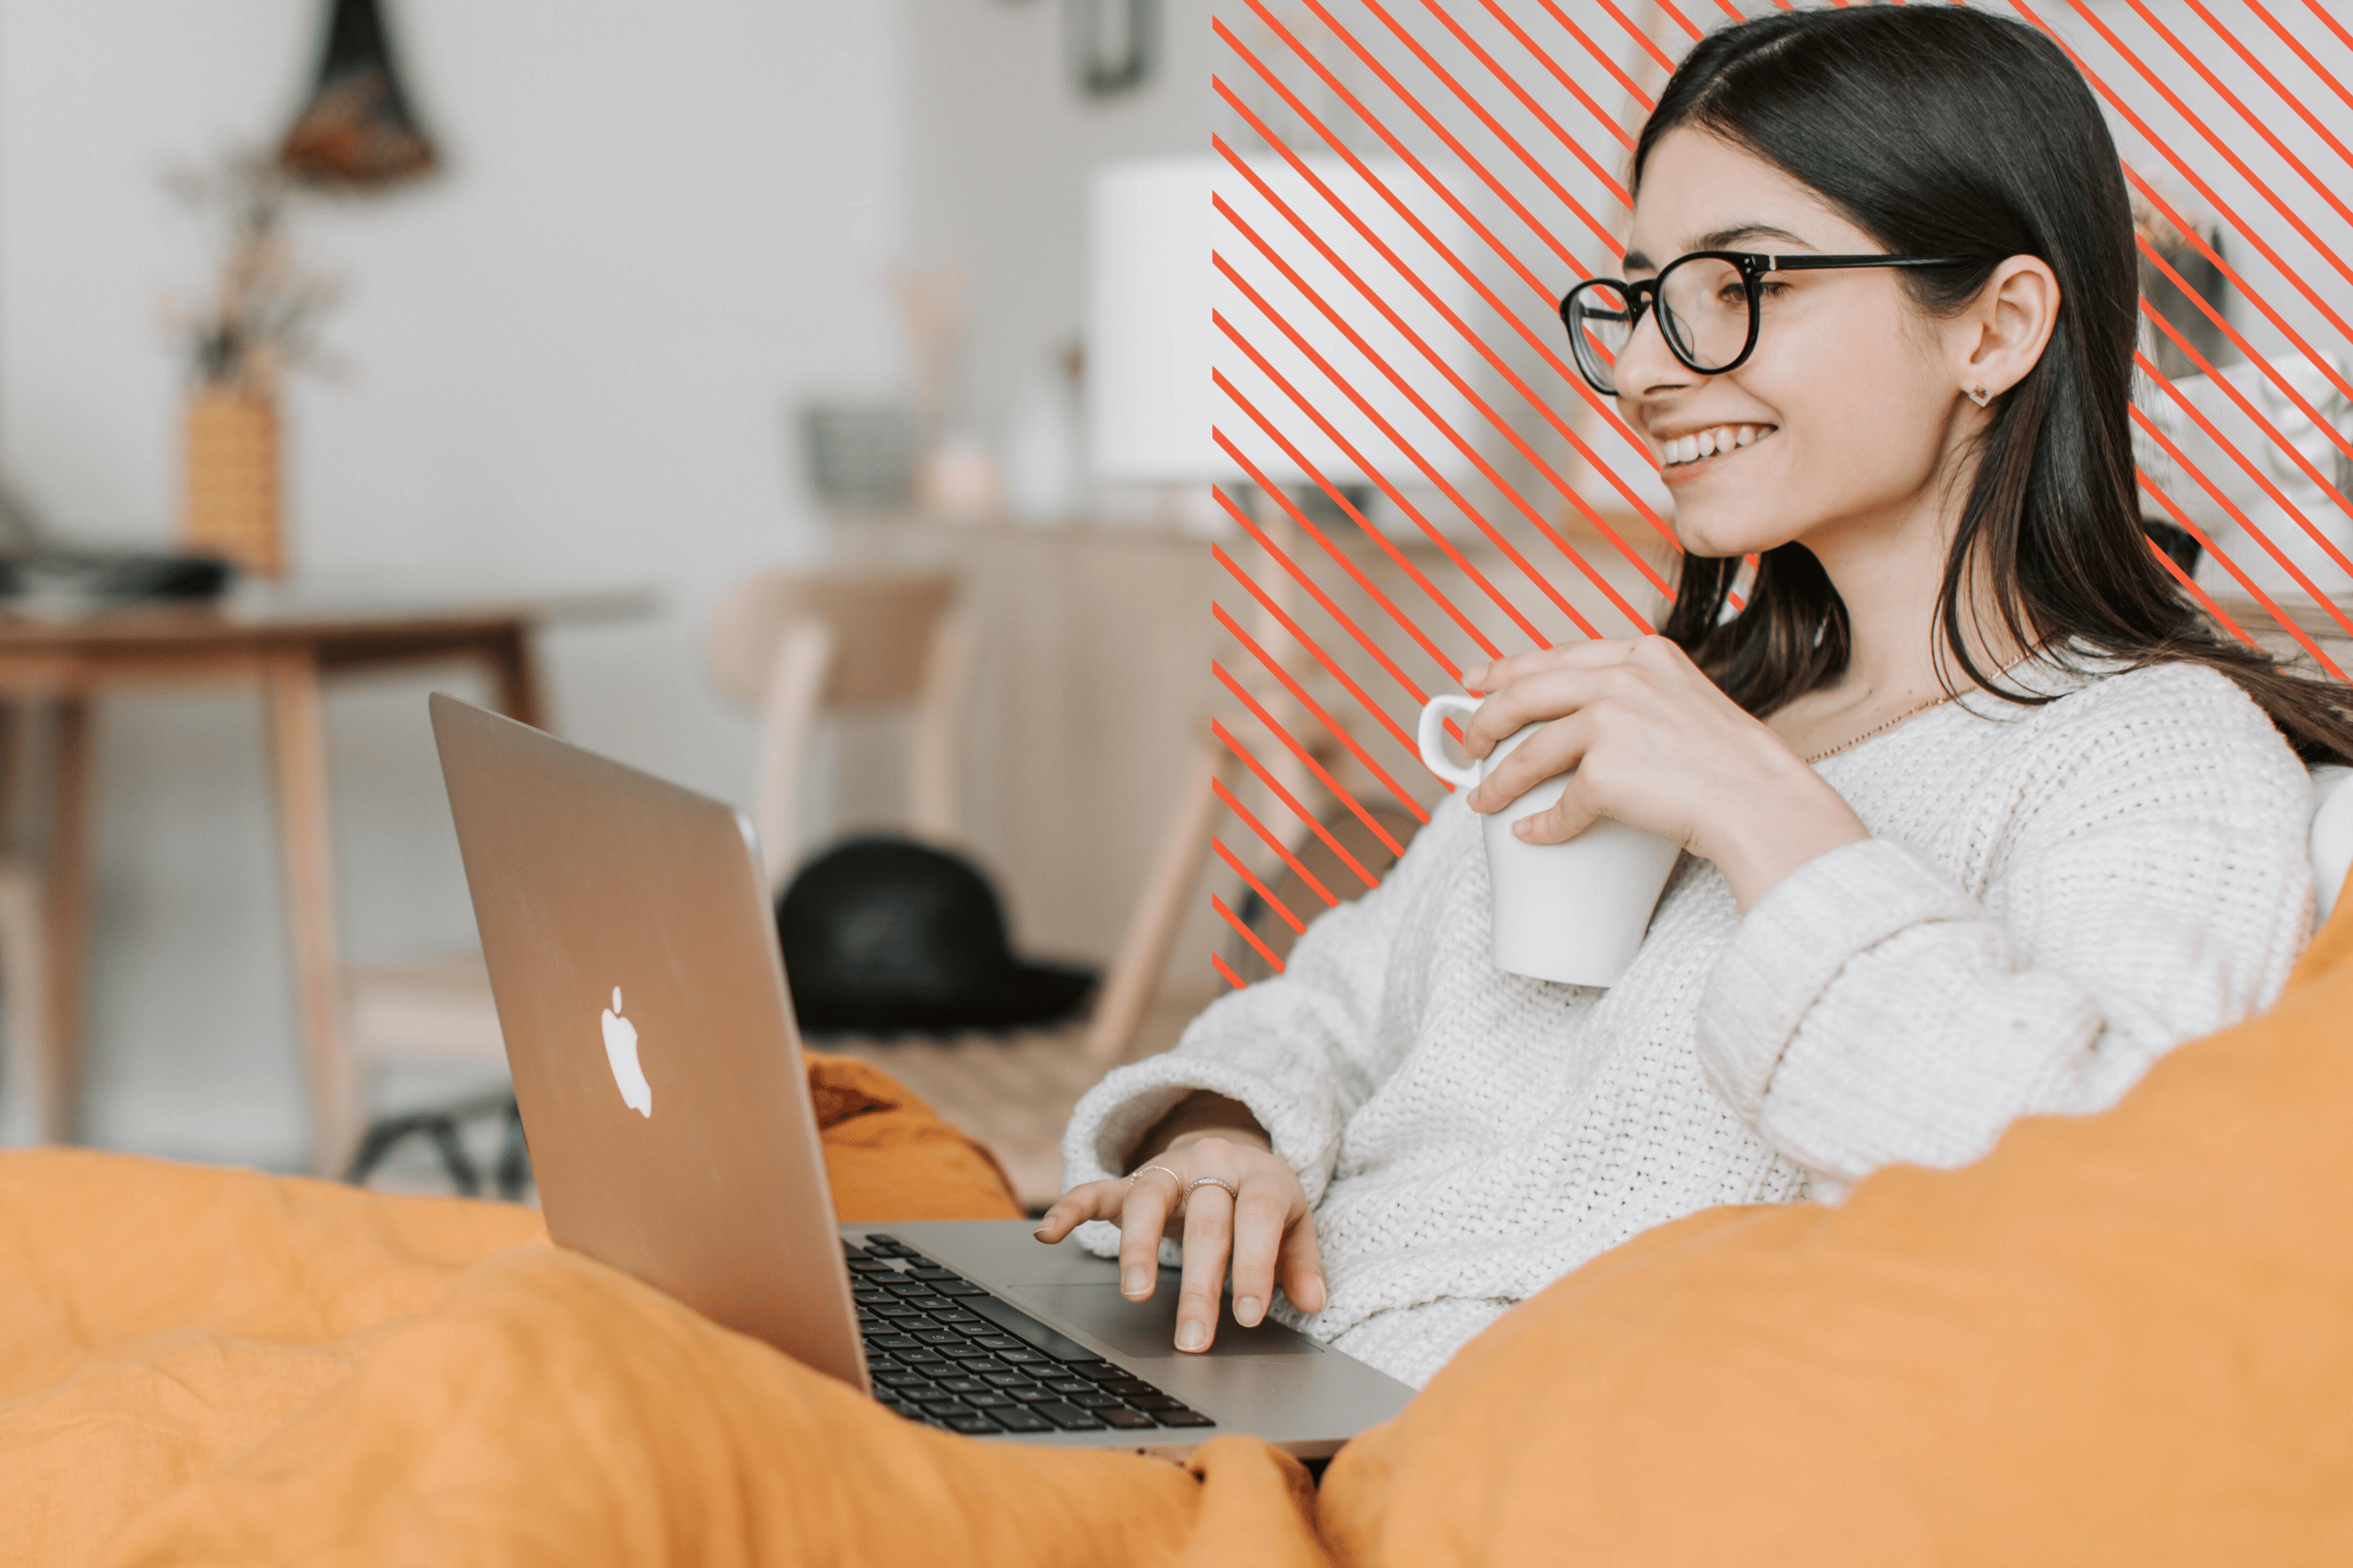 Remote employee enjoying flexible work options at home